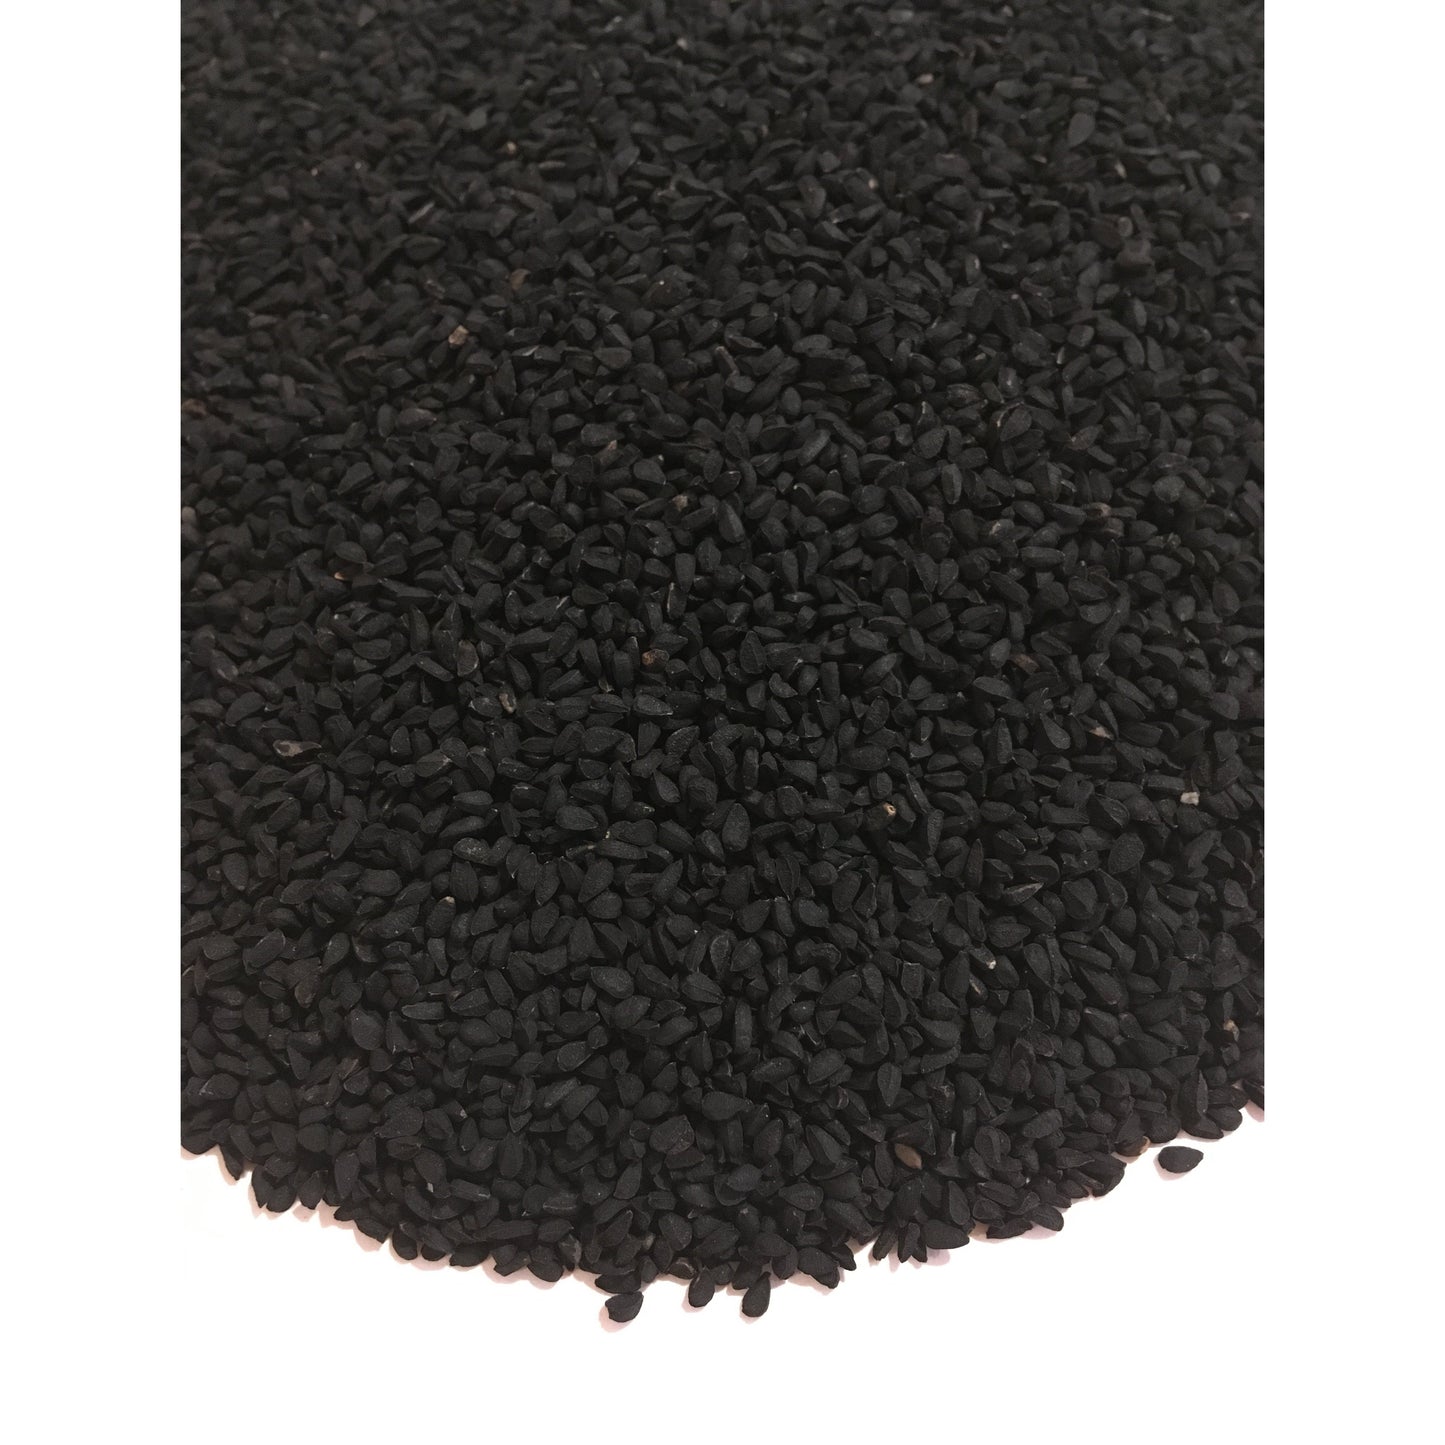 Nigella Seed (black caraway, black cumin, nigella, and kalonji)